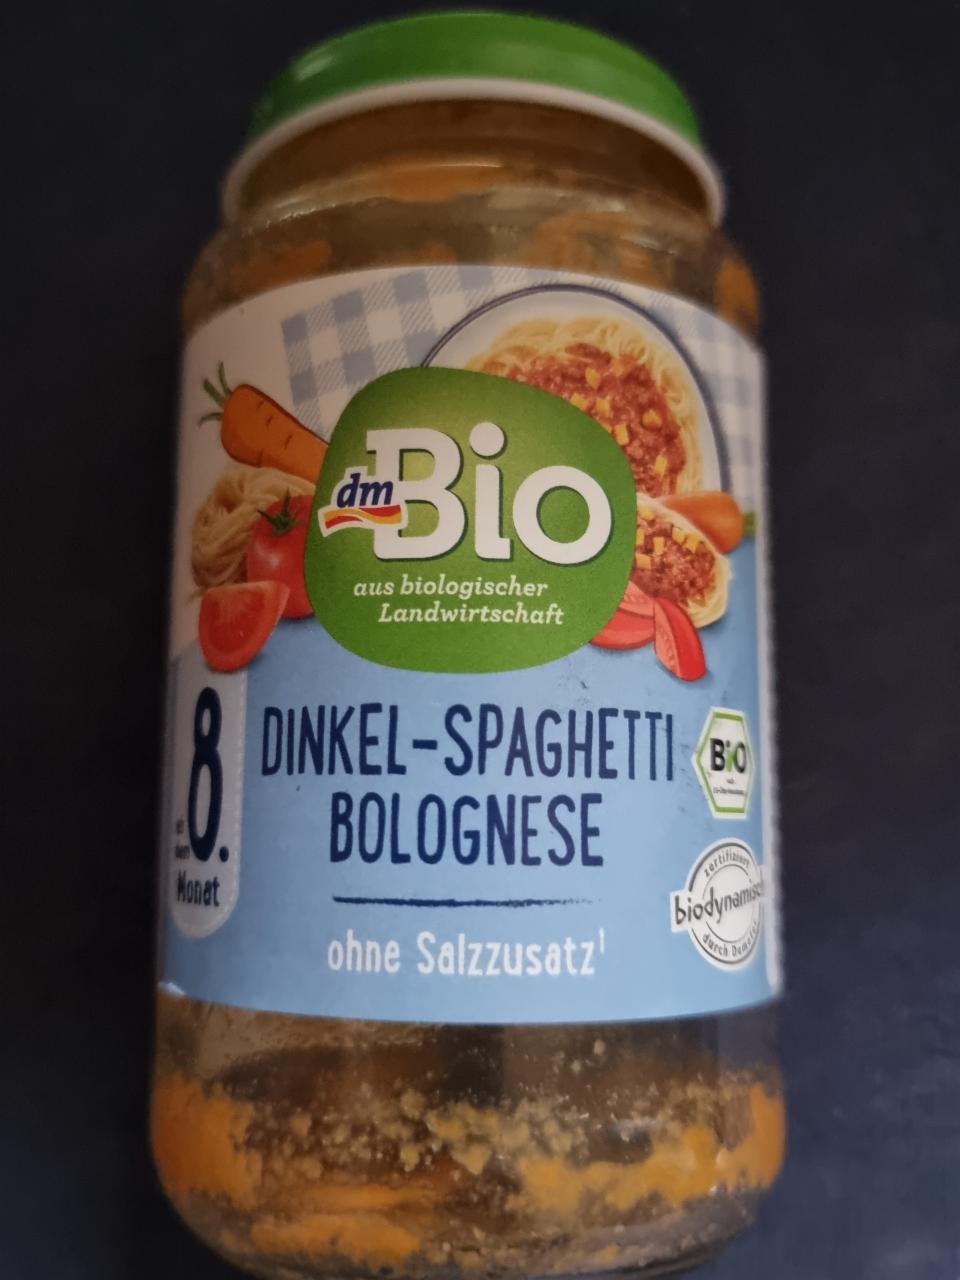 Fotografie - dmBio Príkrm Bolonské špaldové špagety